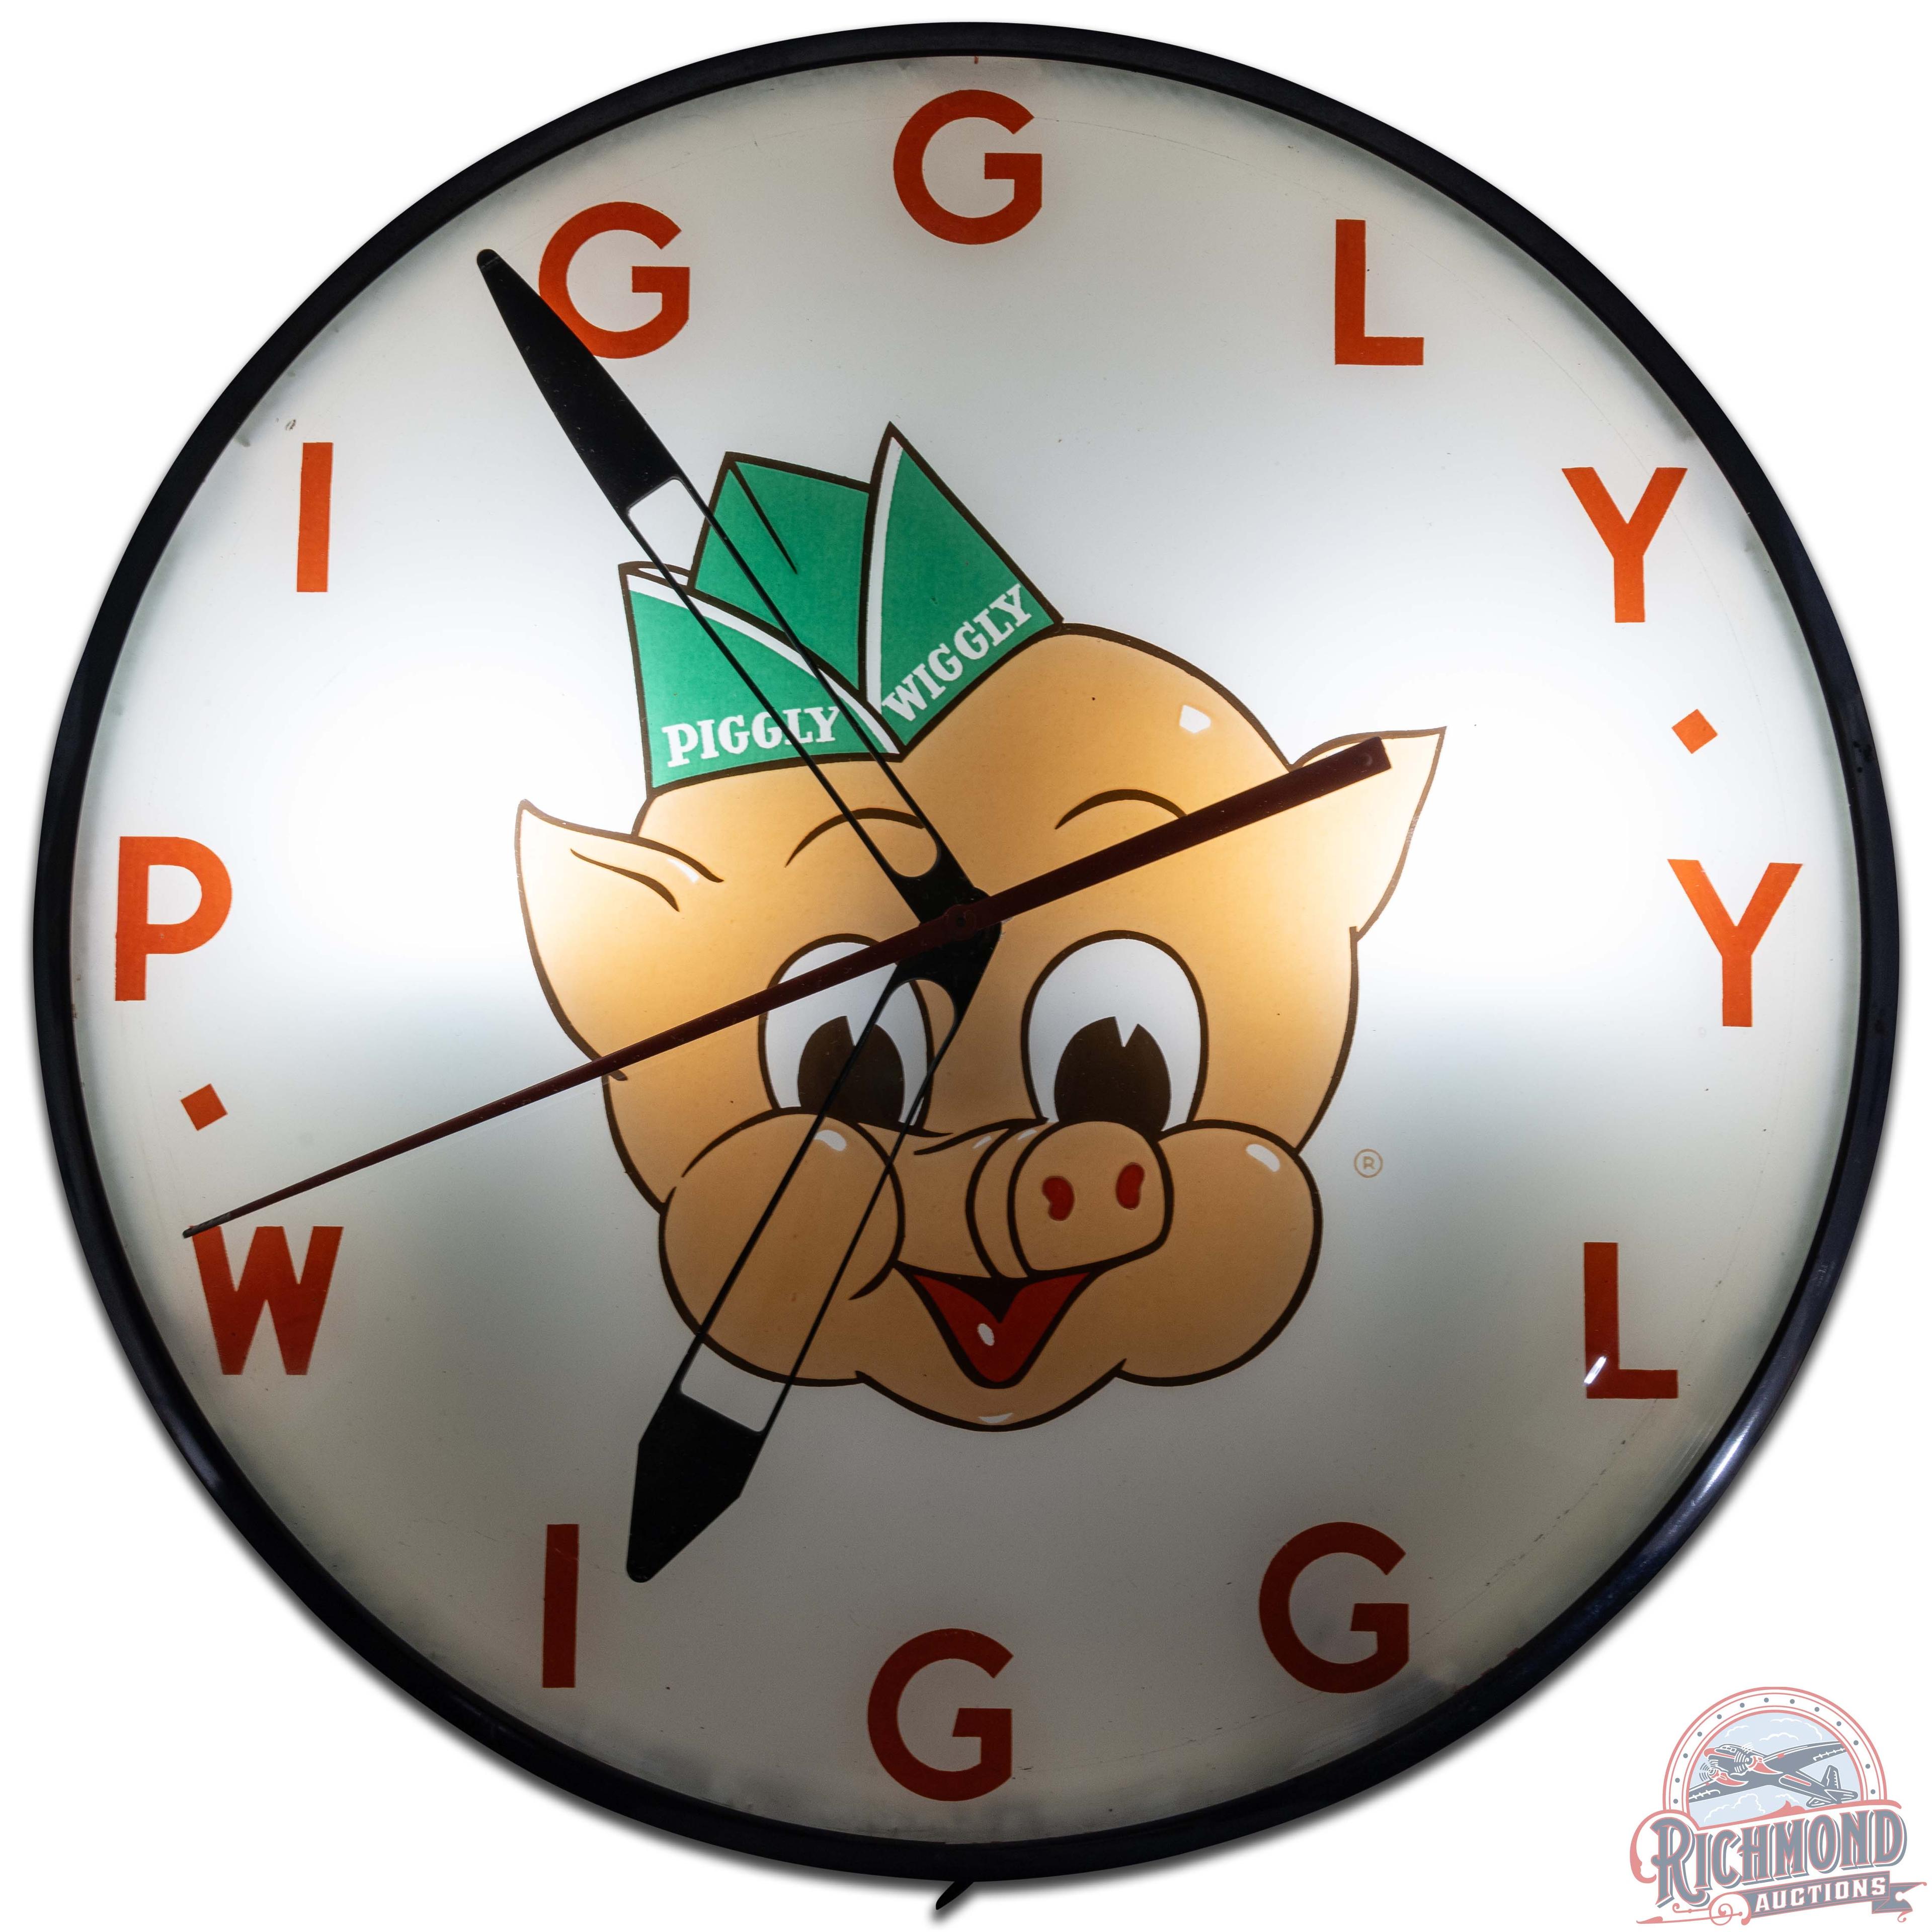 Piggly Wiggly 15" Telechron Advertising Clock w/ Pig Logo